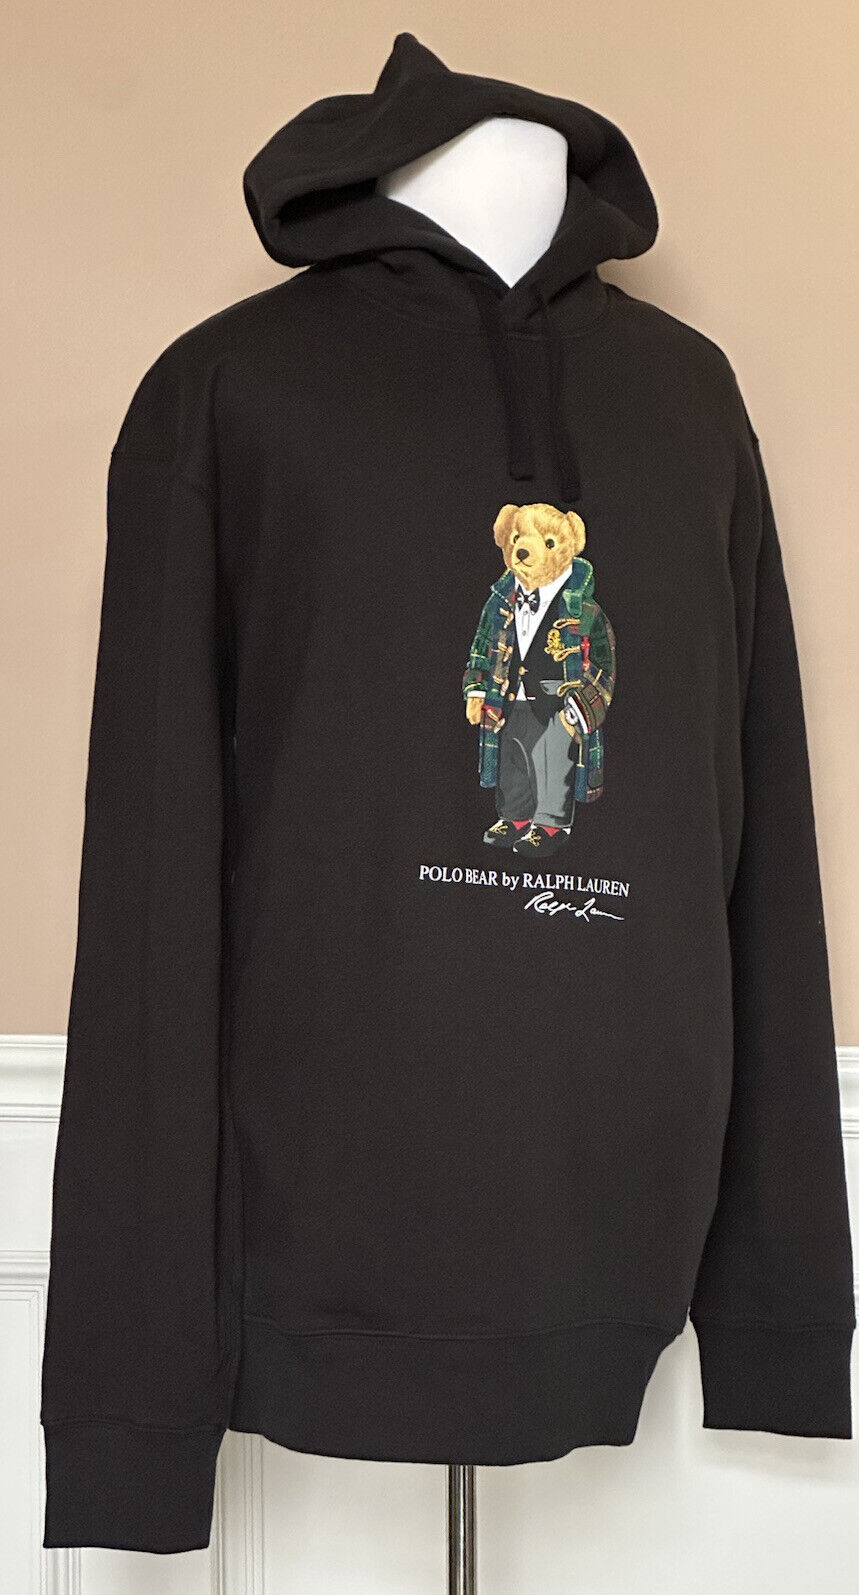 NWT $188 Polo Ralph Lauren Long Sleeve Bear Sweatshirt with Hoodie Black XLT/TGL